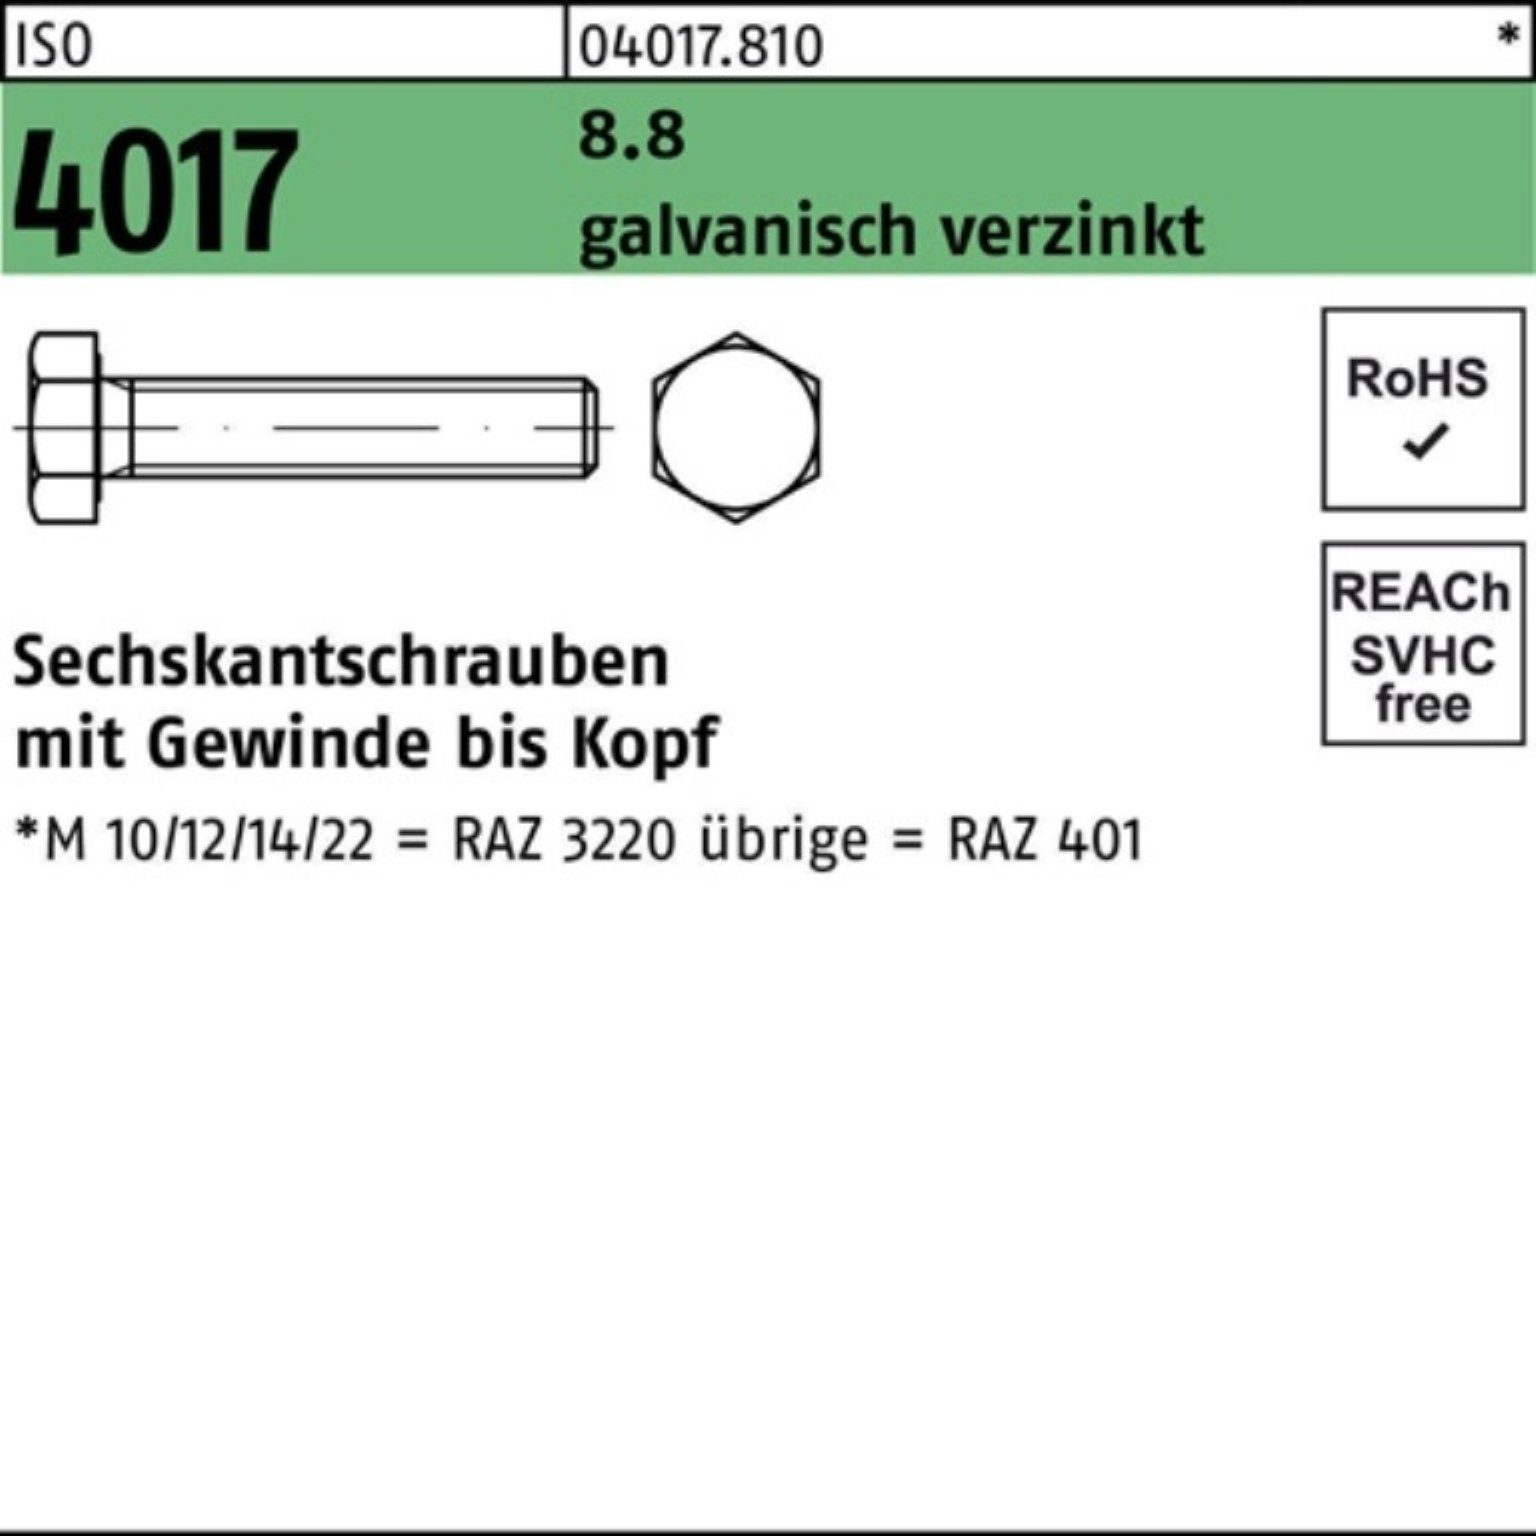 Bufab Sechskantschraube 100er Pack 150 VG M20x 4017 8.8 25 ISO galv.verz. St Sechskantschraube